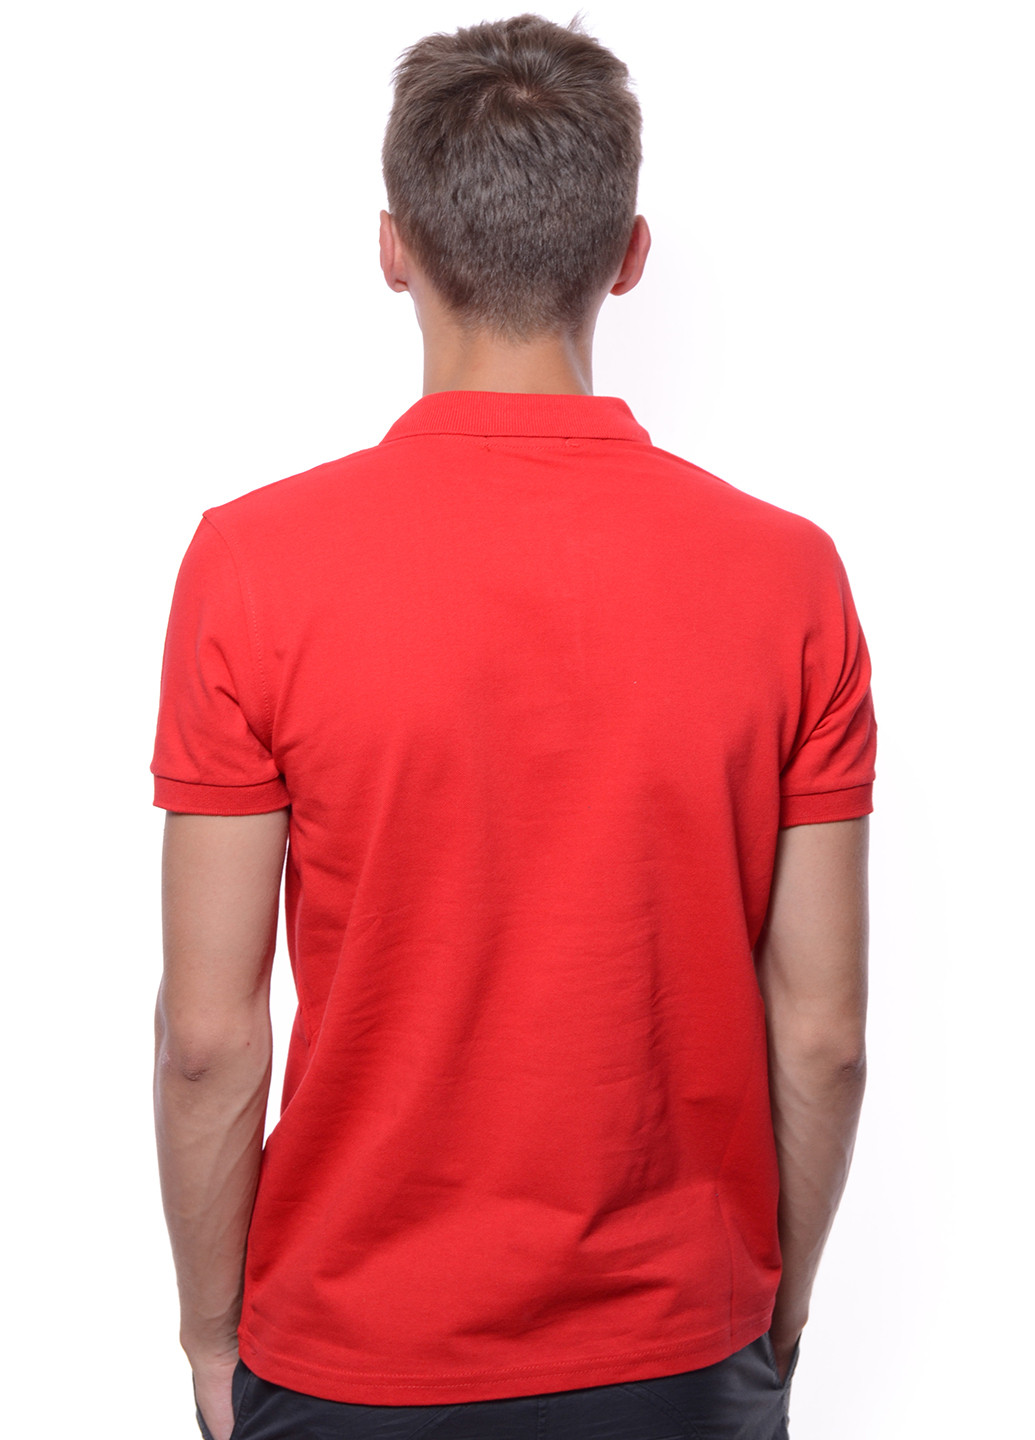 Красная футболка-поло для мужчин Kigili однотонная